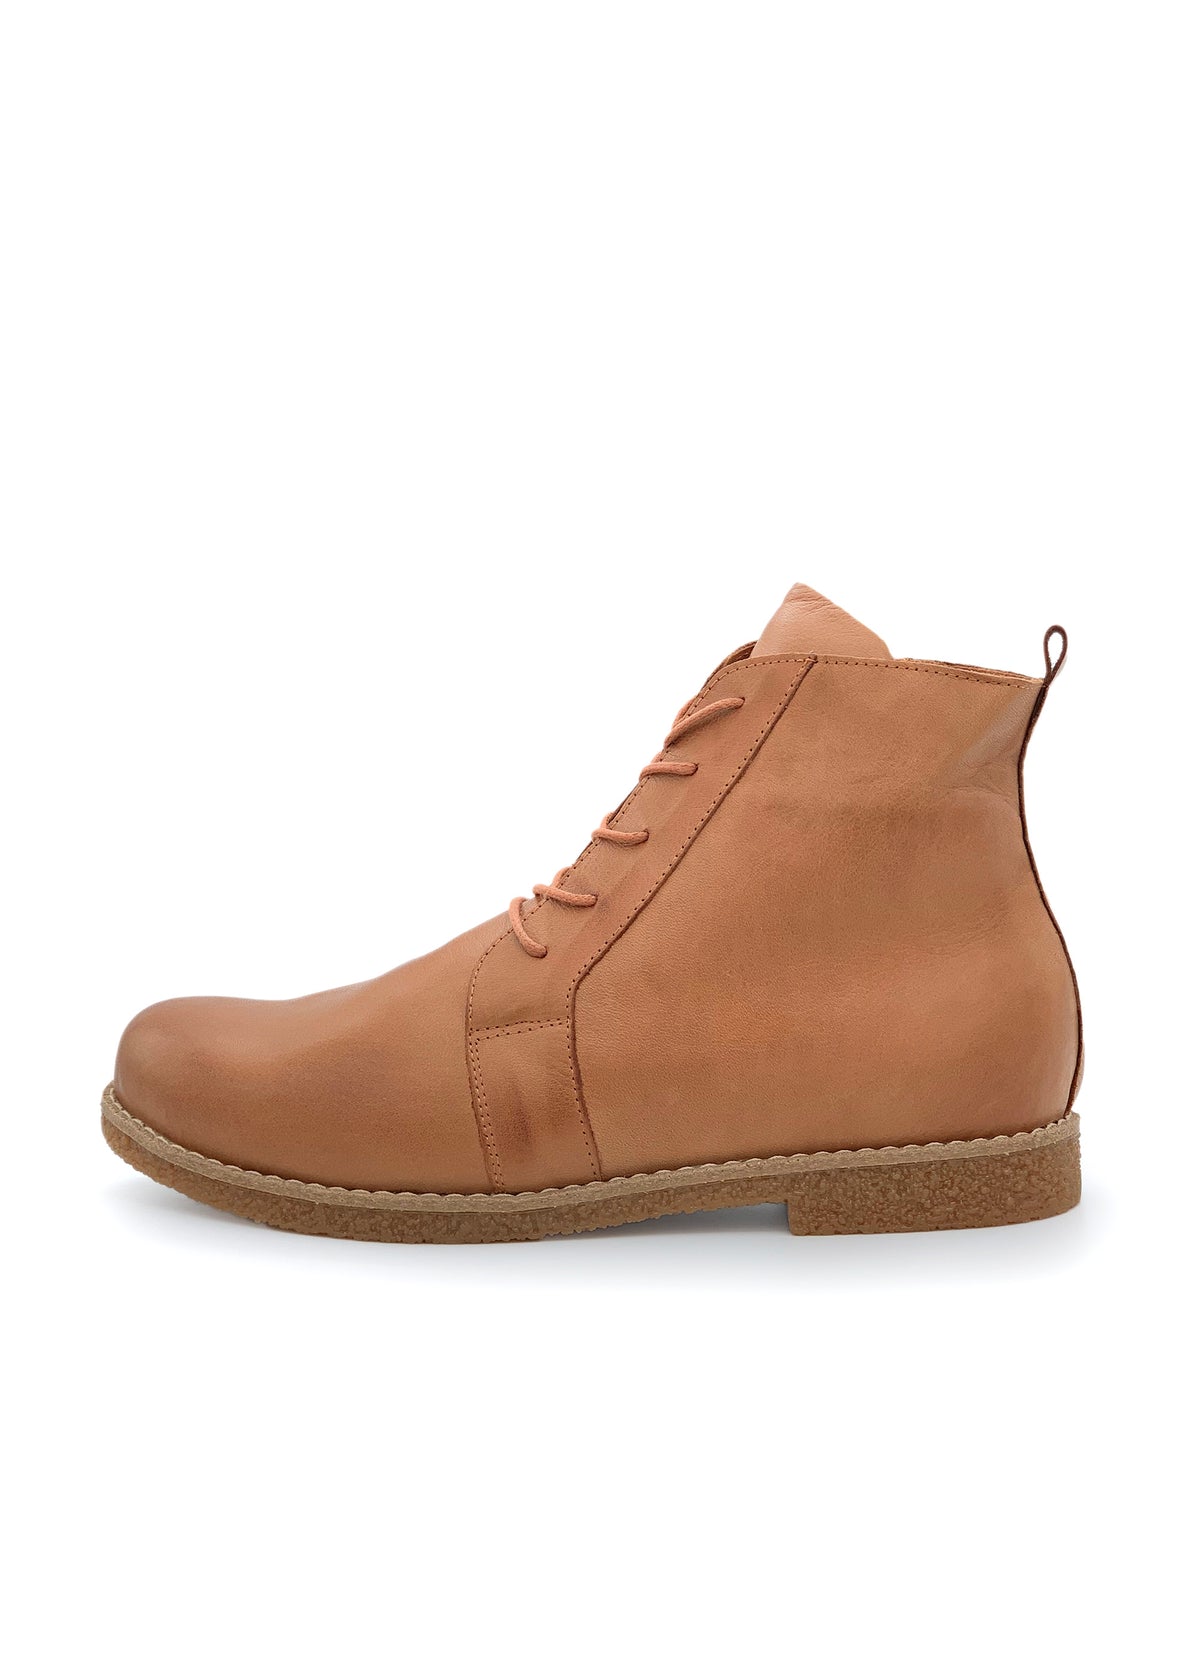 Ankle boots - cognac brown